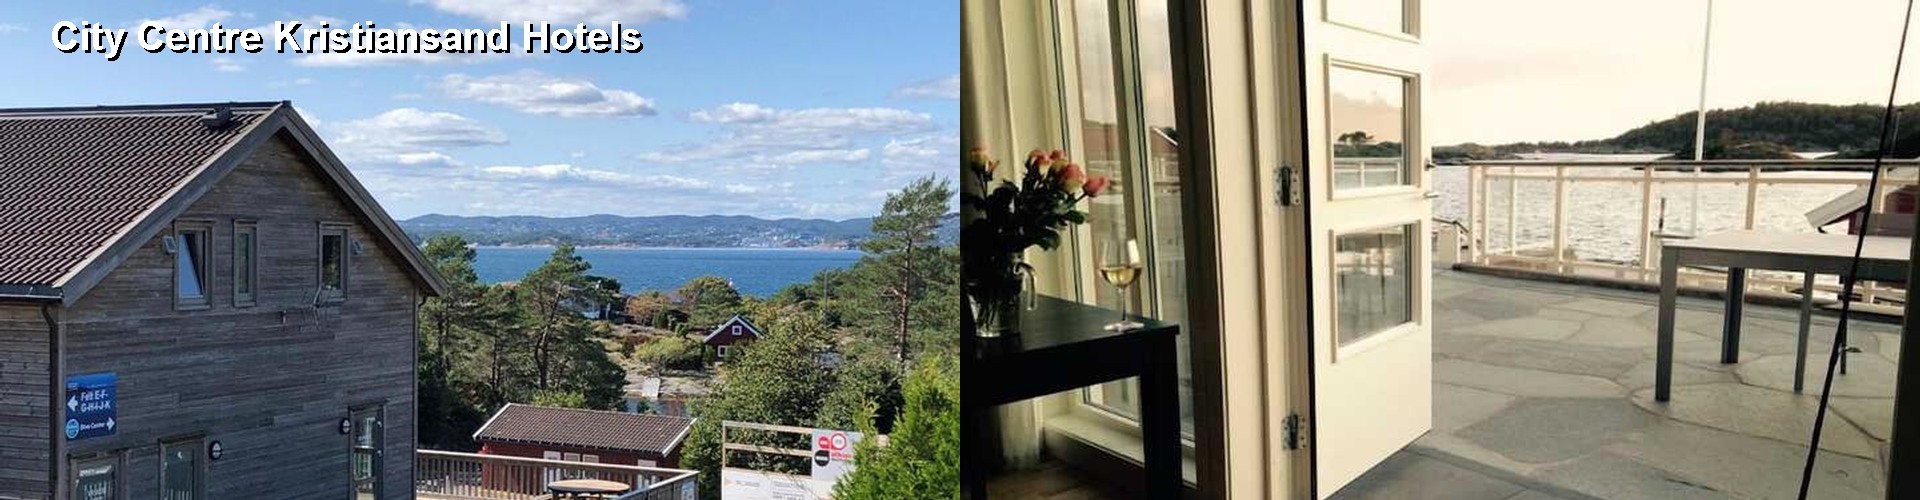 5 Best Hotels near City Centre Kristiansand